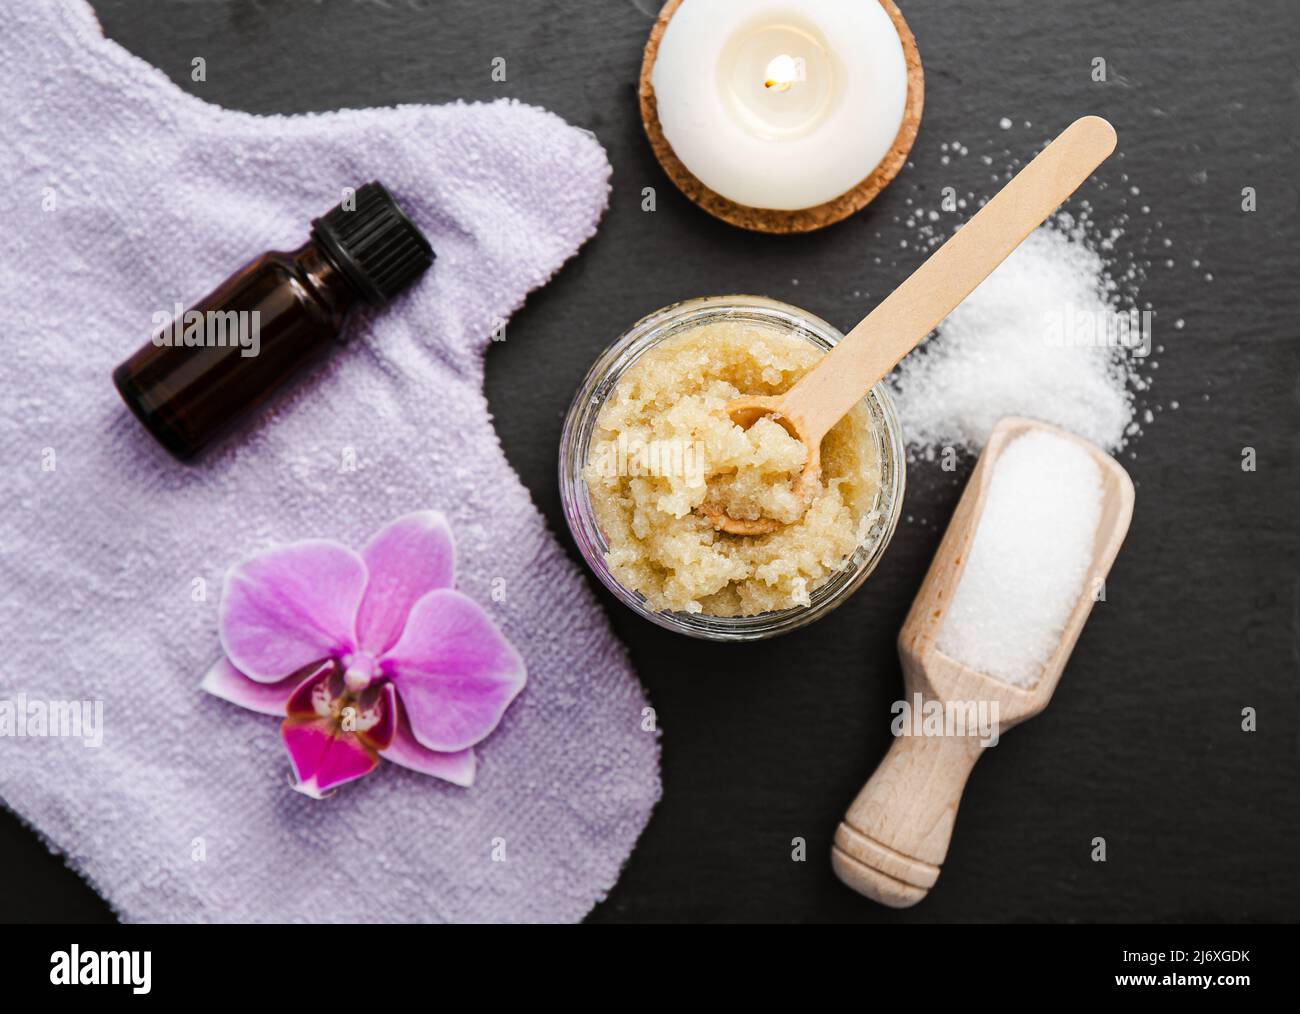 Homemade sugar body scrub in glass jar, decorated with orchid blossom, body scrub glove wooden spoon with sugar powder on black stone cutting board. Stock Photo